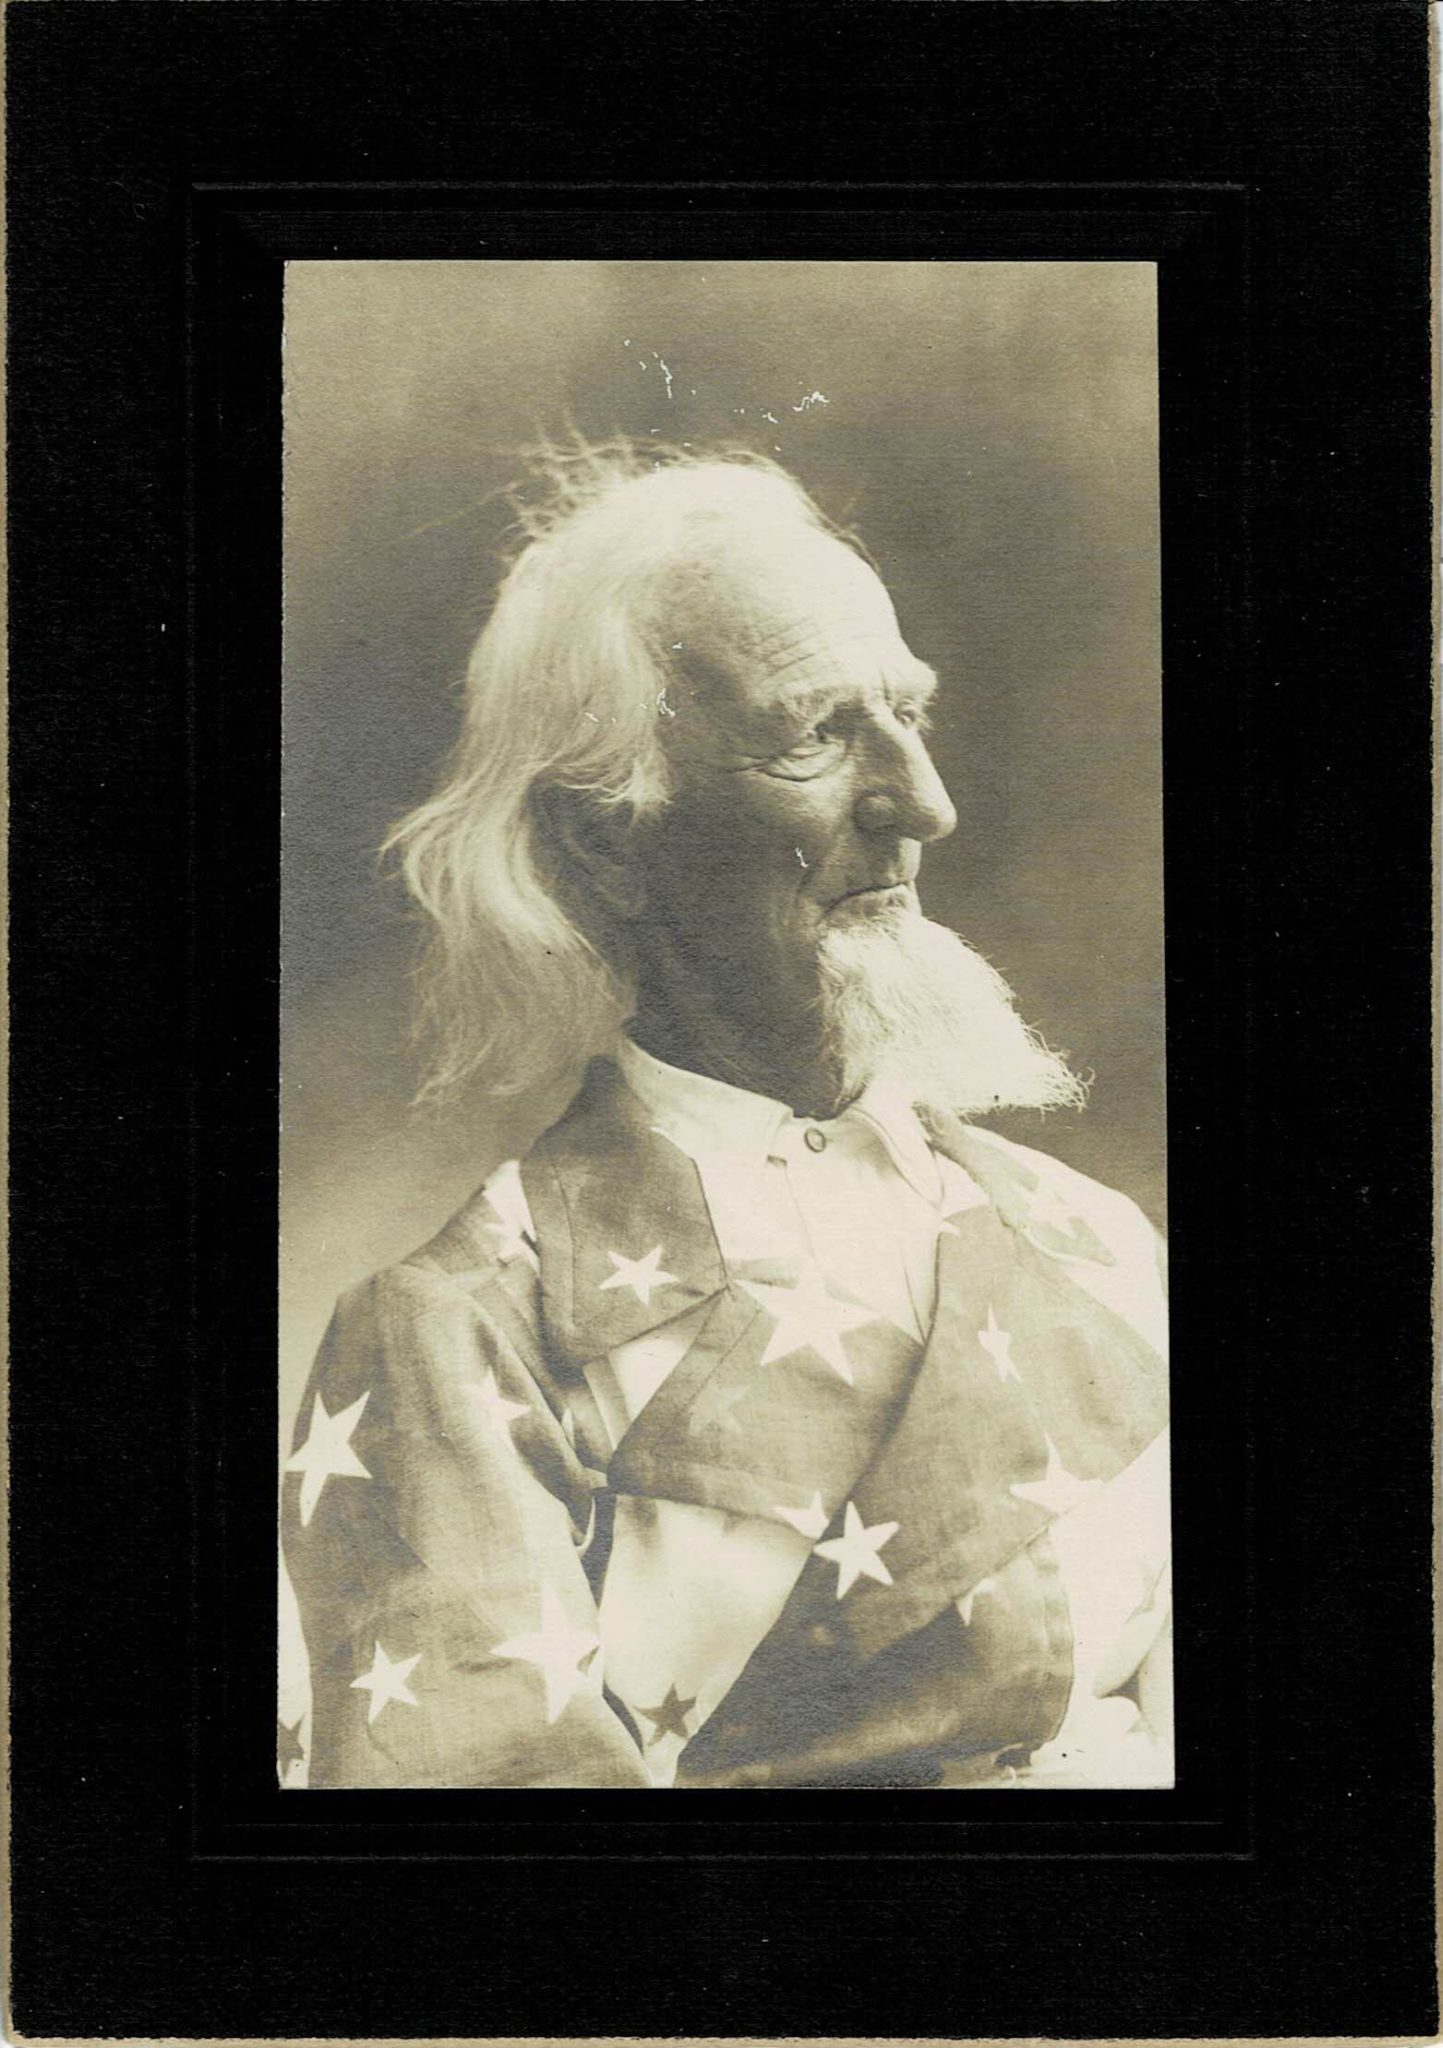 William Smith dressed as Uncle Sam (Portrait)